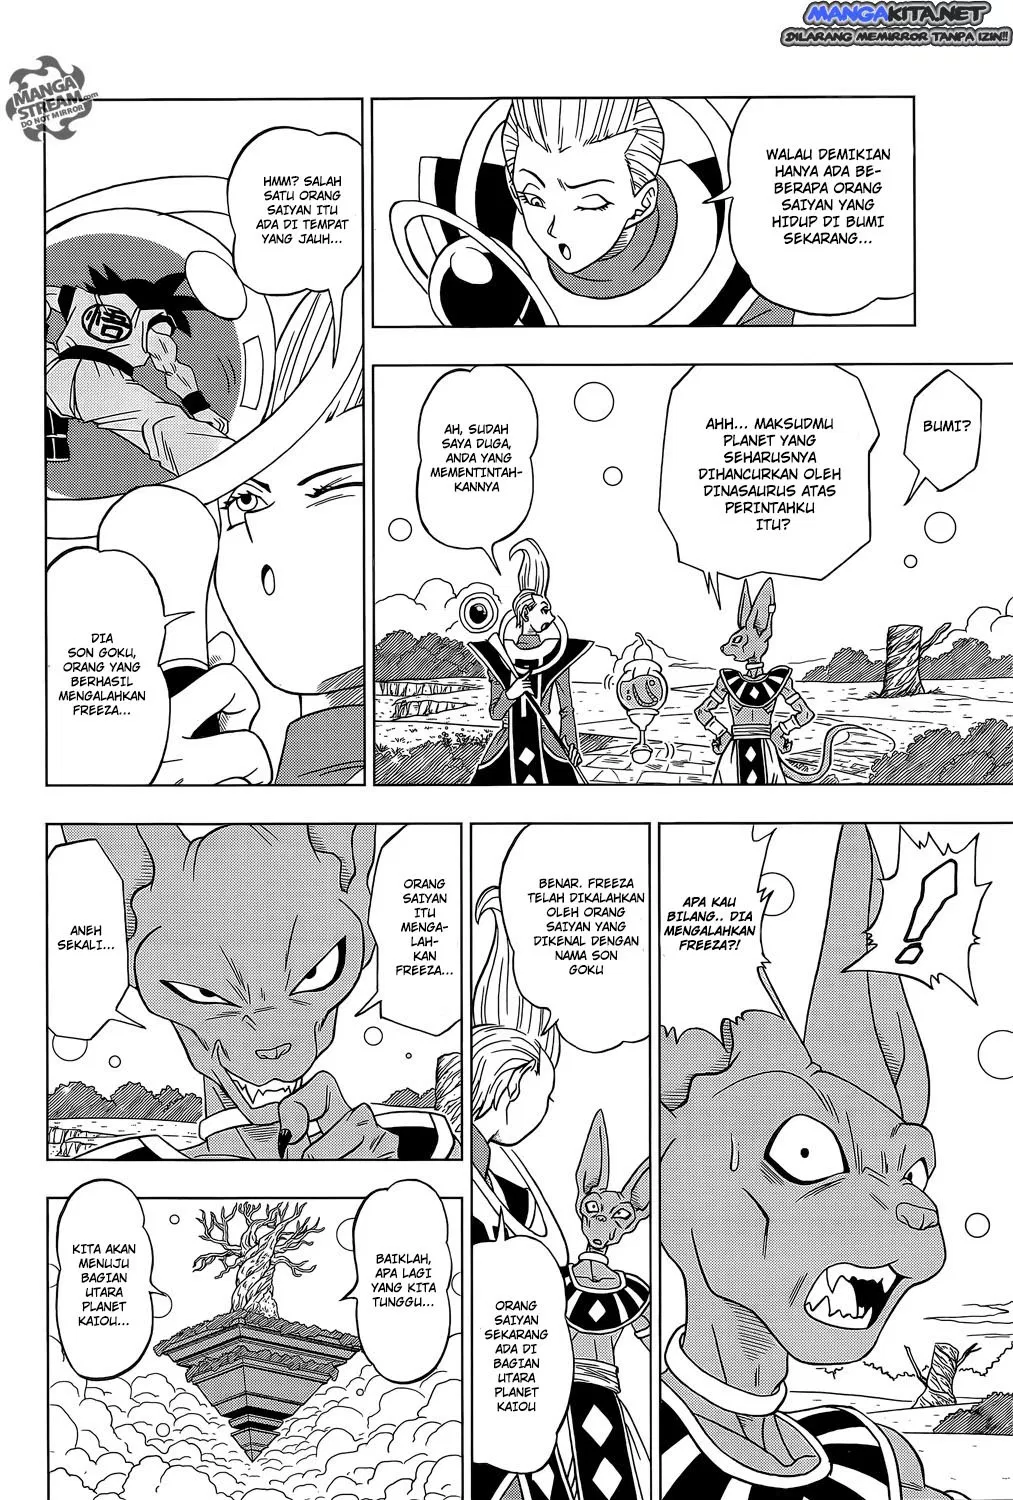 Dragon Ball Super Chapter 02